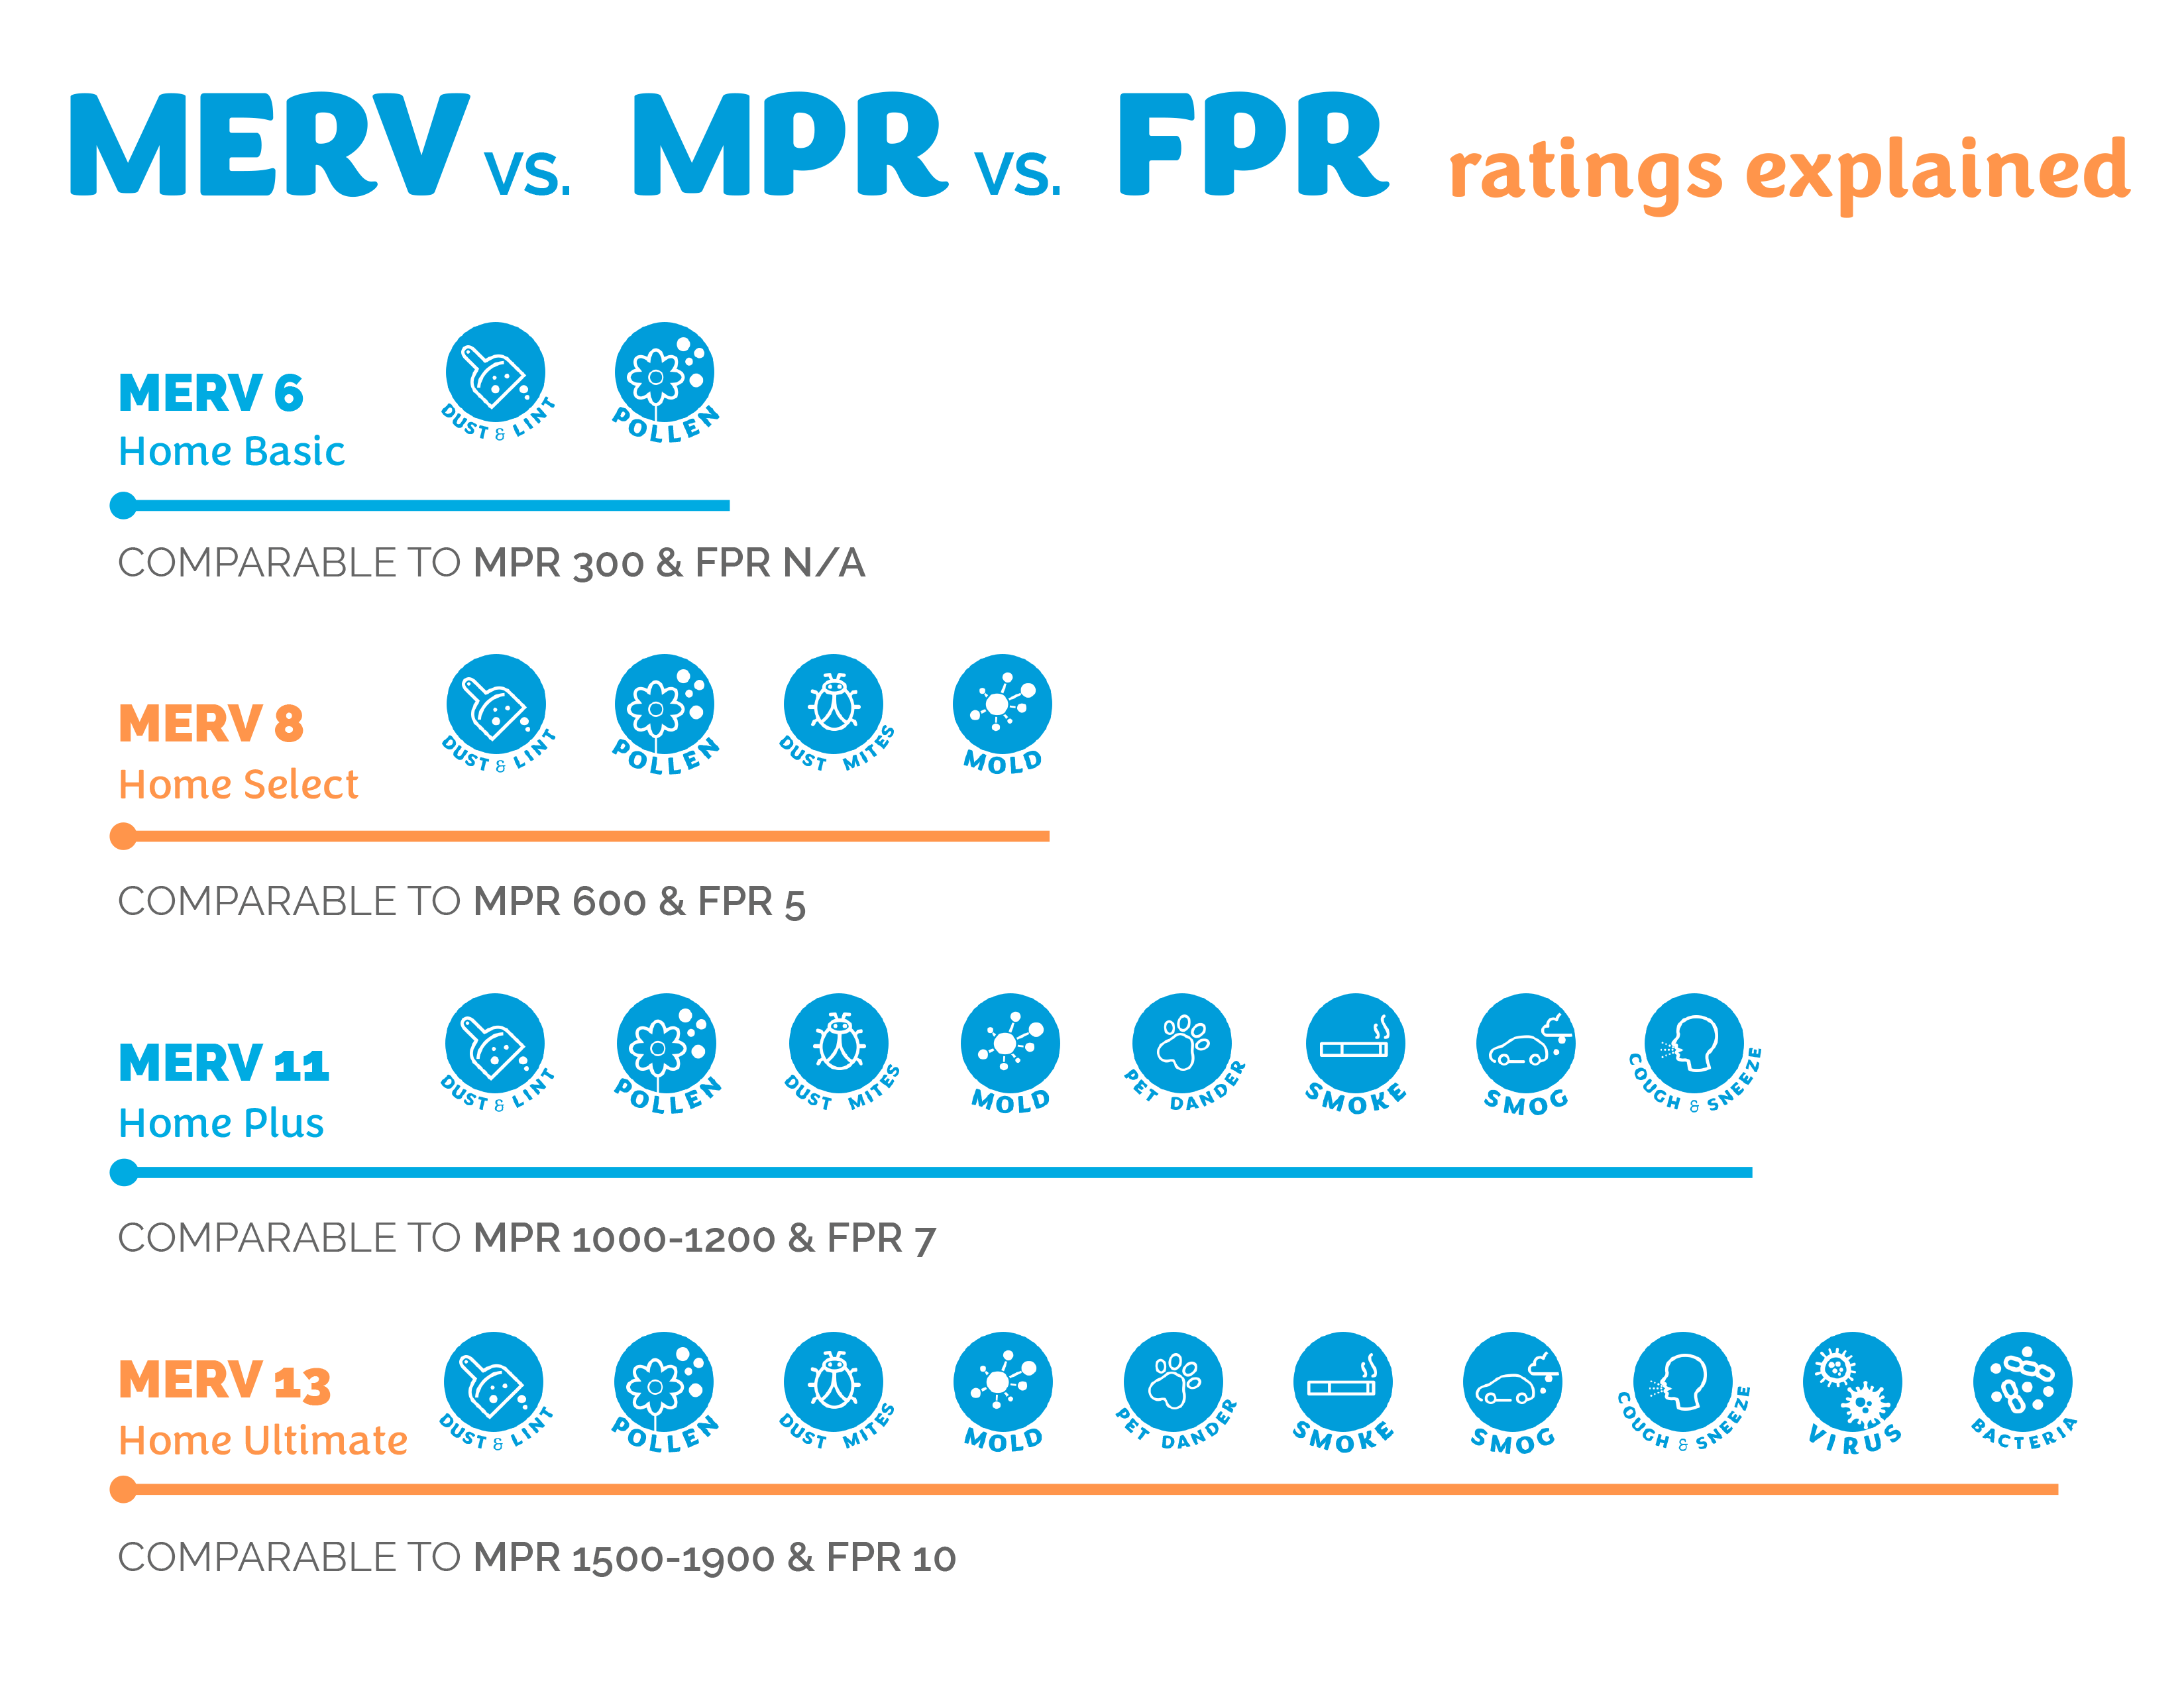 MERV Ratings